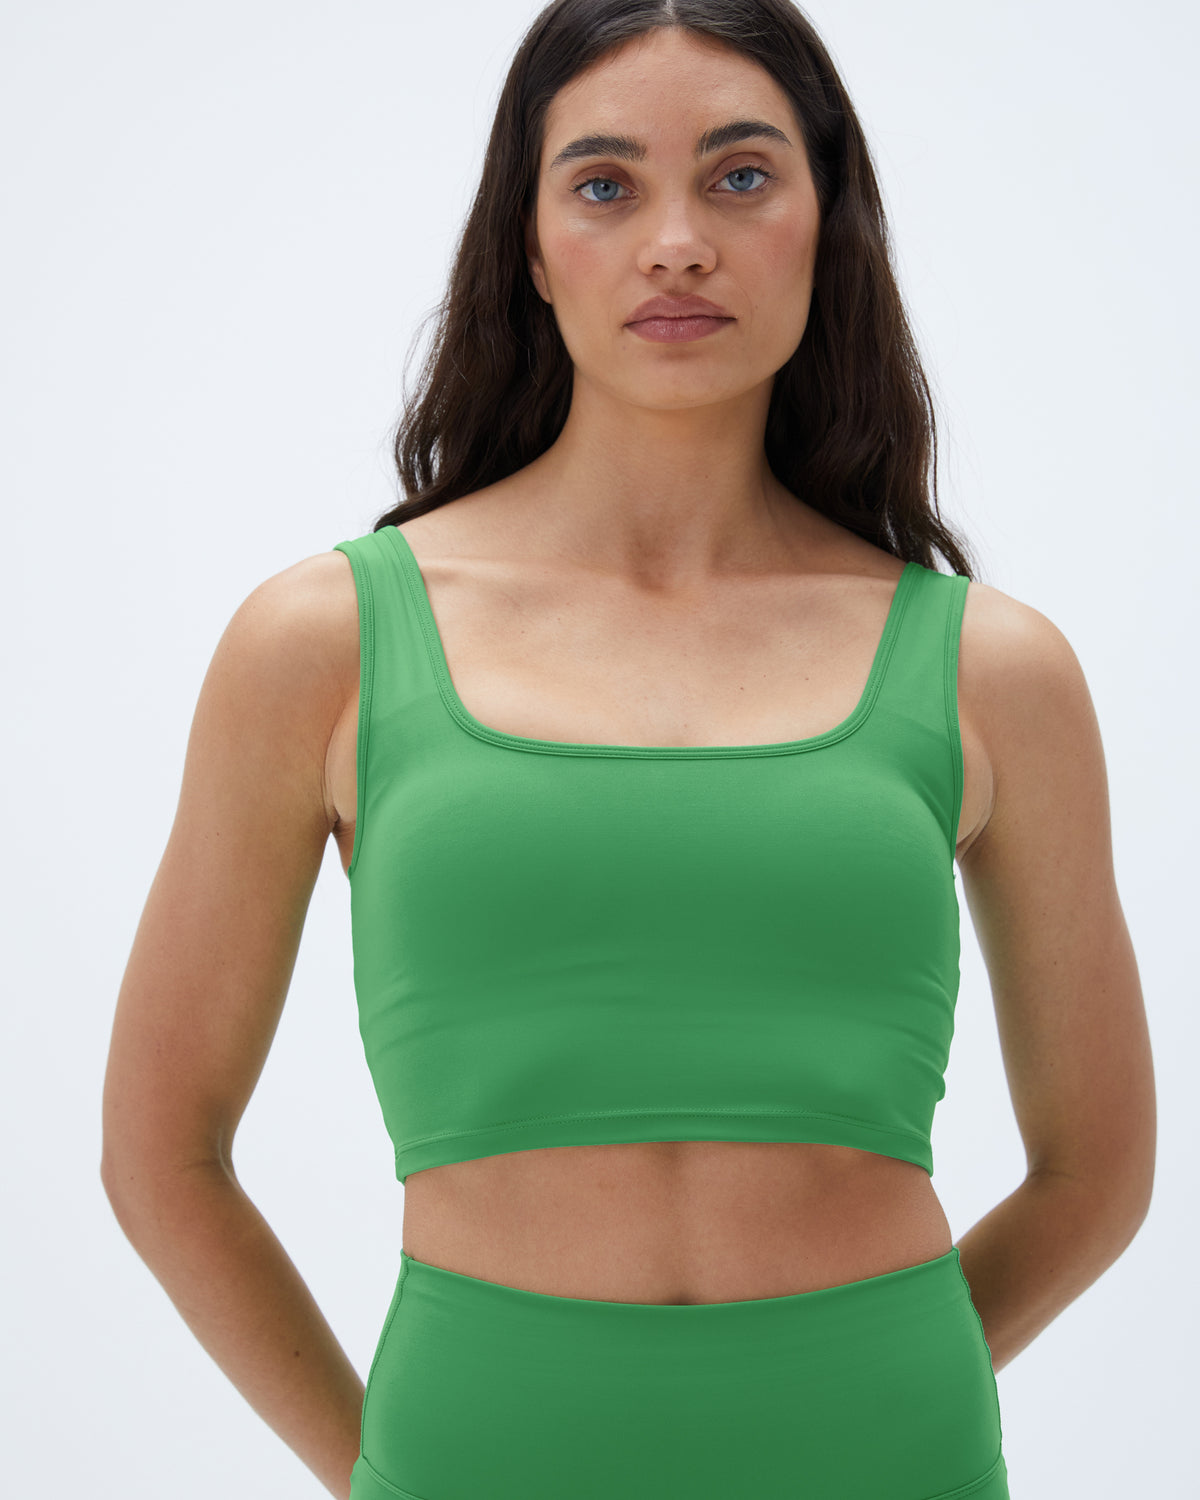 We need Hailey Bieber's neon green sports bra (and her sauna too)